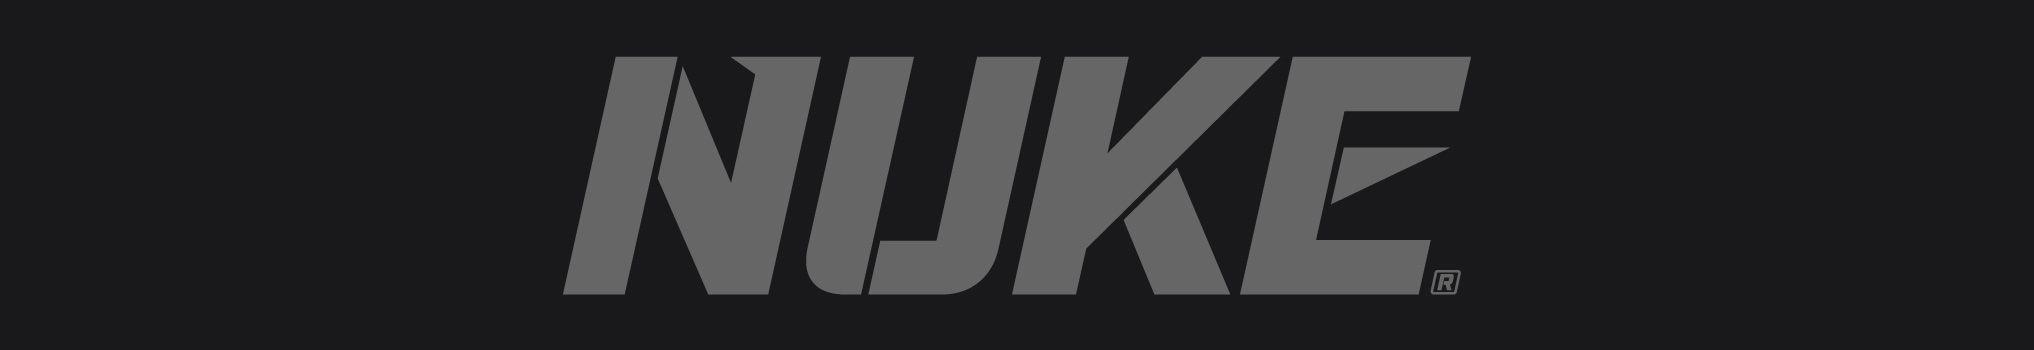 Nuke Logo - nuke-logo – NUTRITECH Official – NUTRITECHFIT.COM